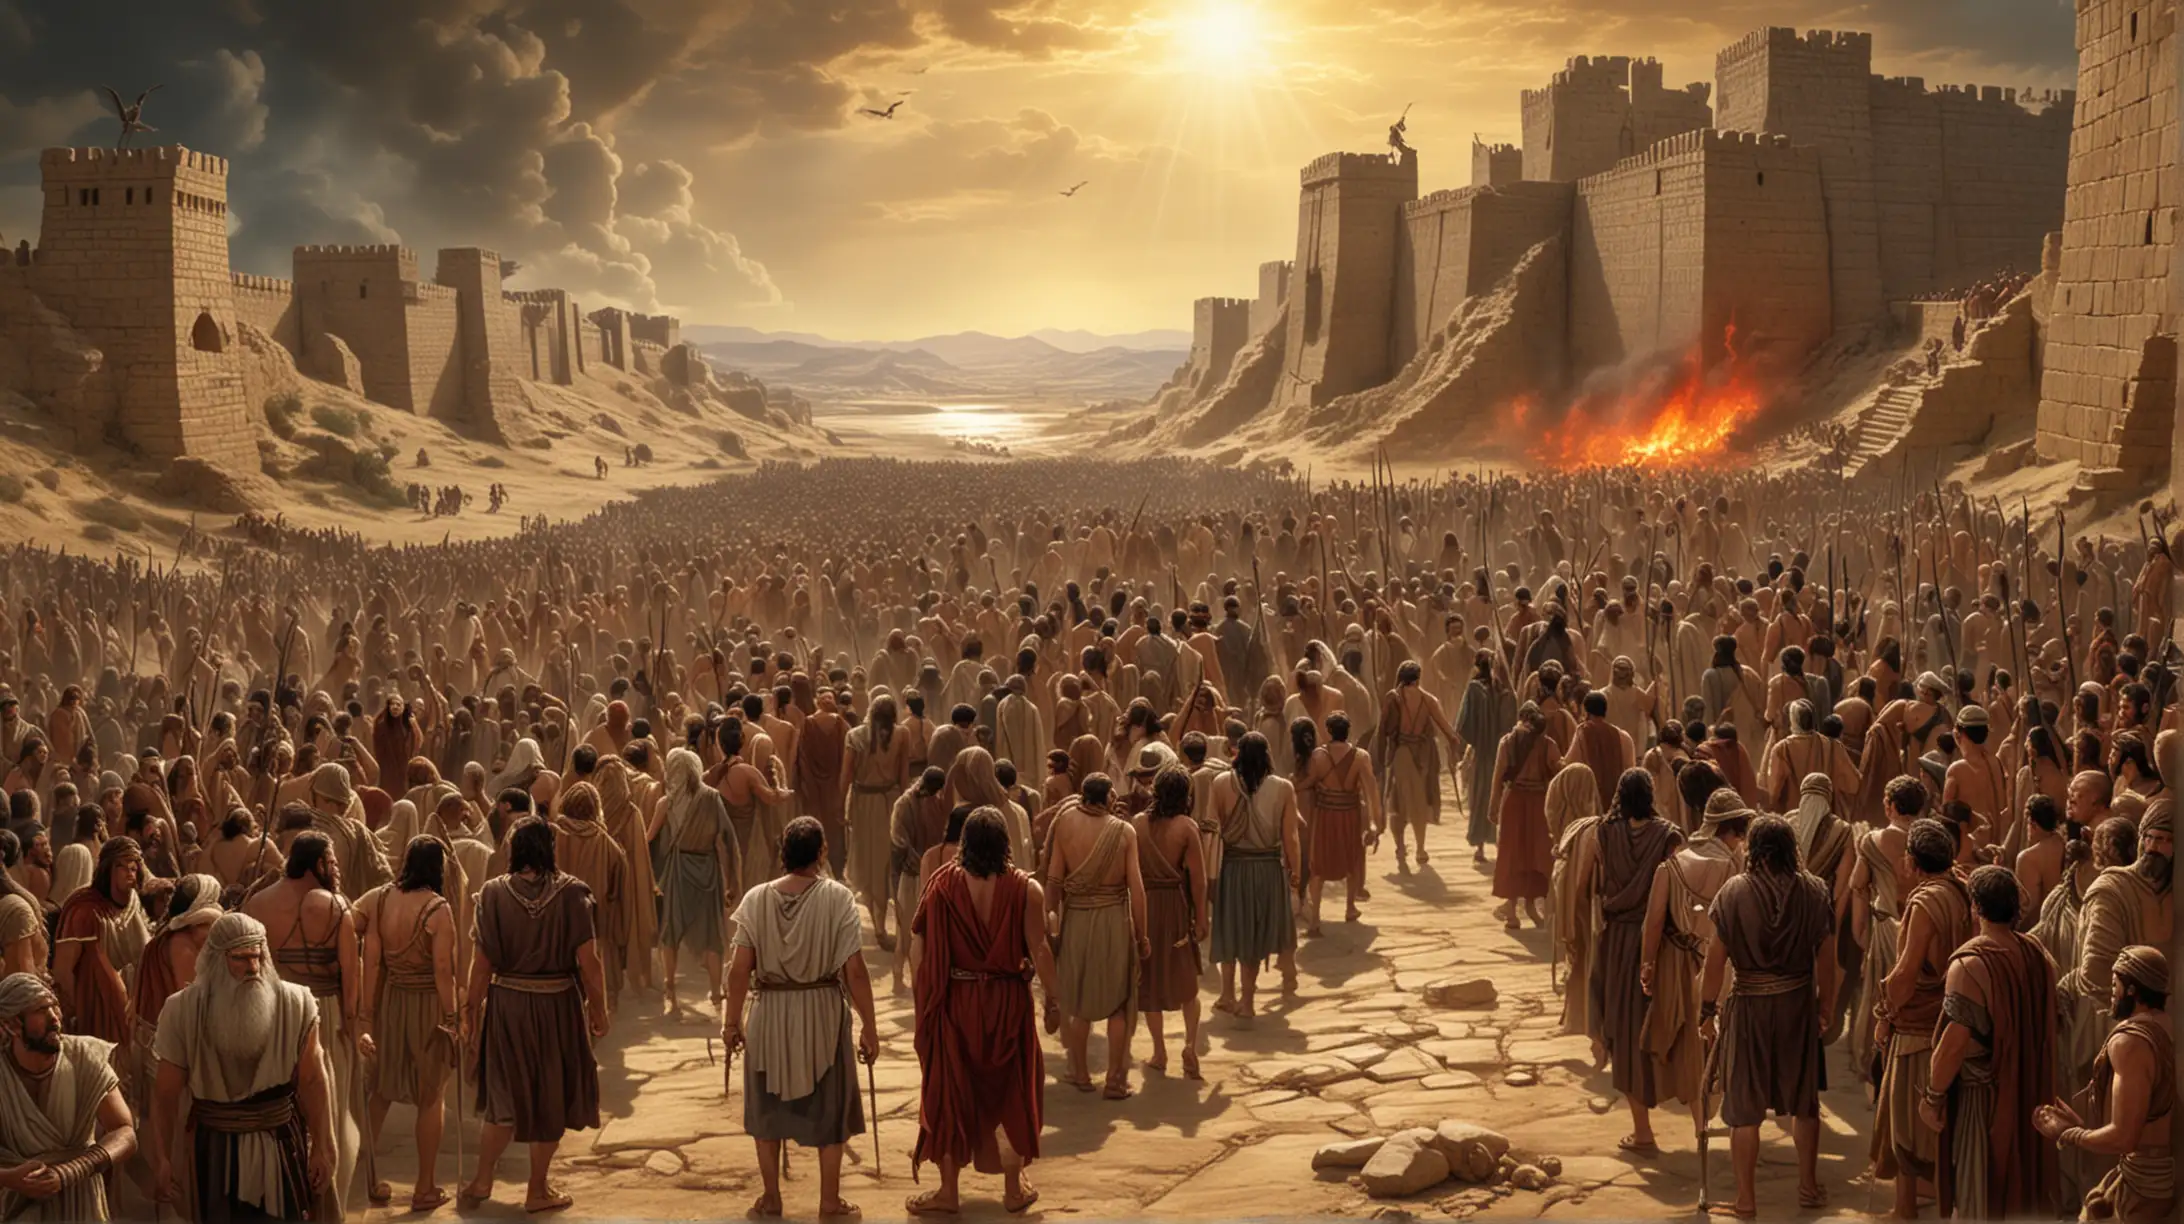 Biblical Israelites Enslaved by King Nebuchadnezzar in Babylon